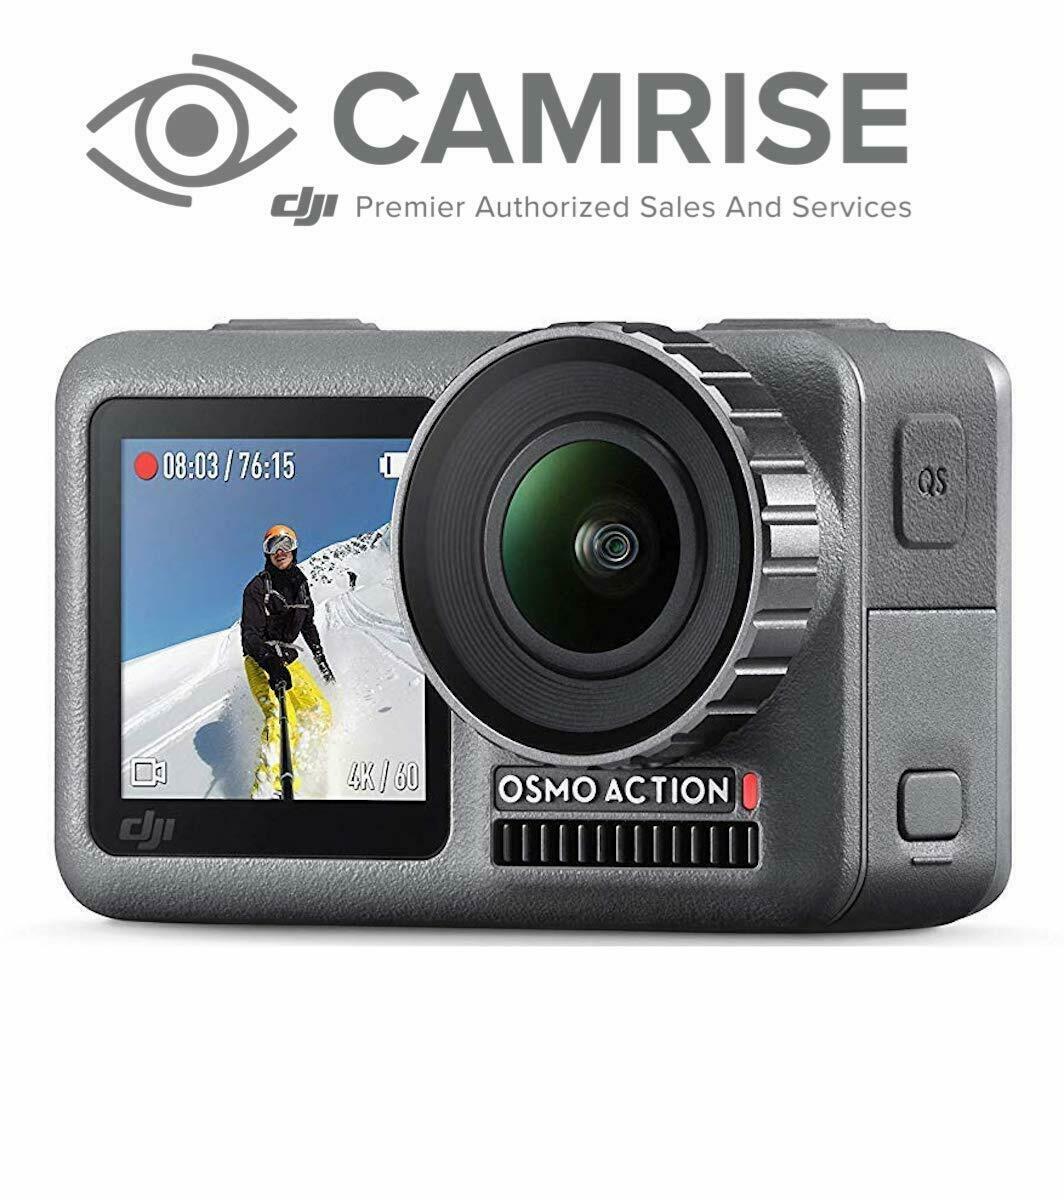 Dji Osmo Action Cam Digital Camera With 2 Displays